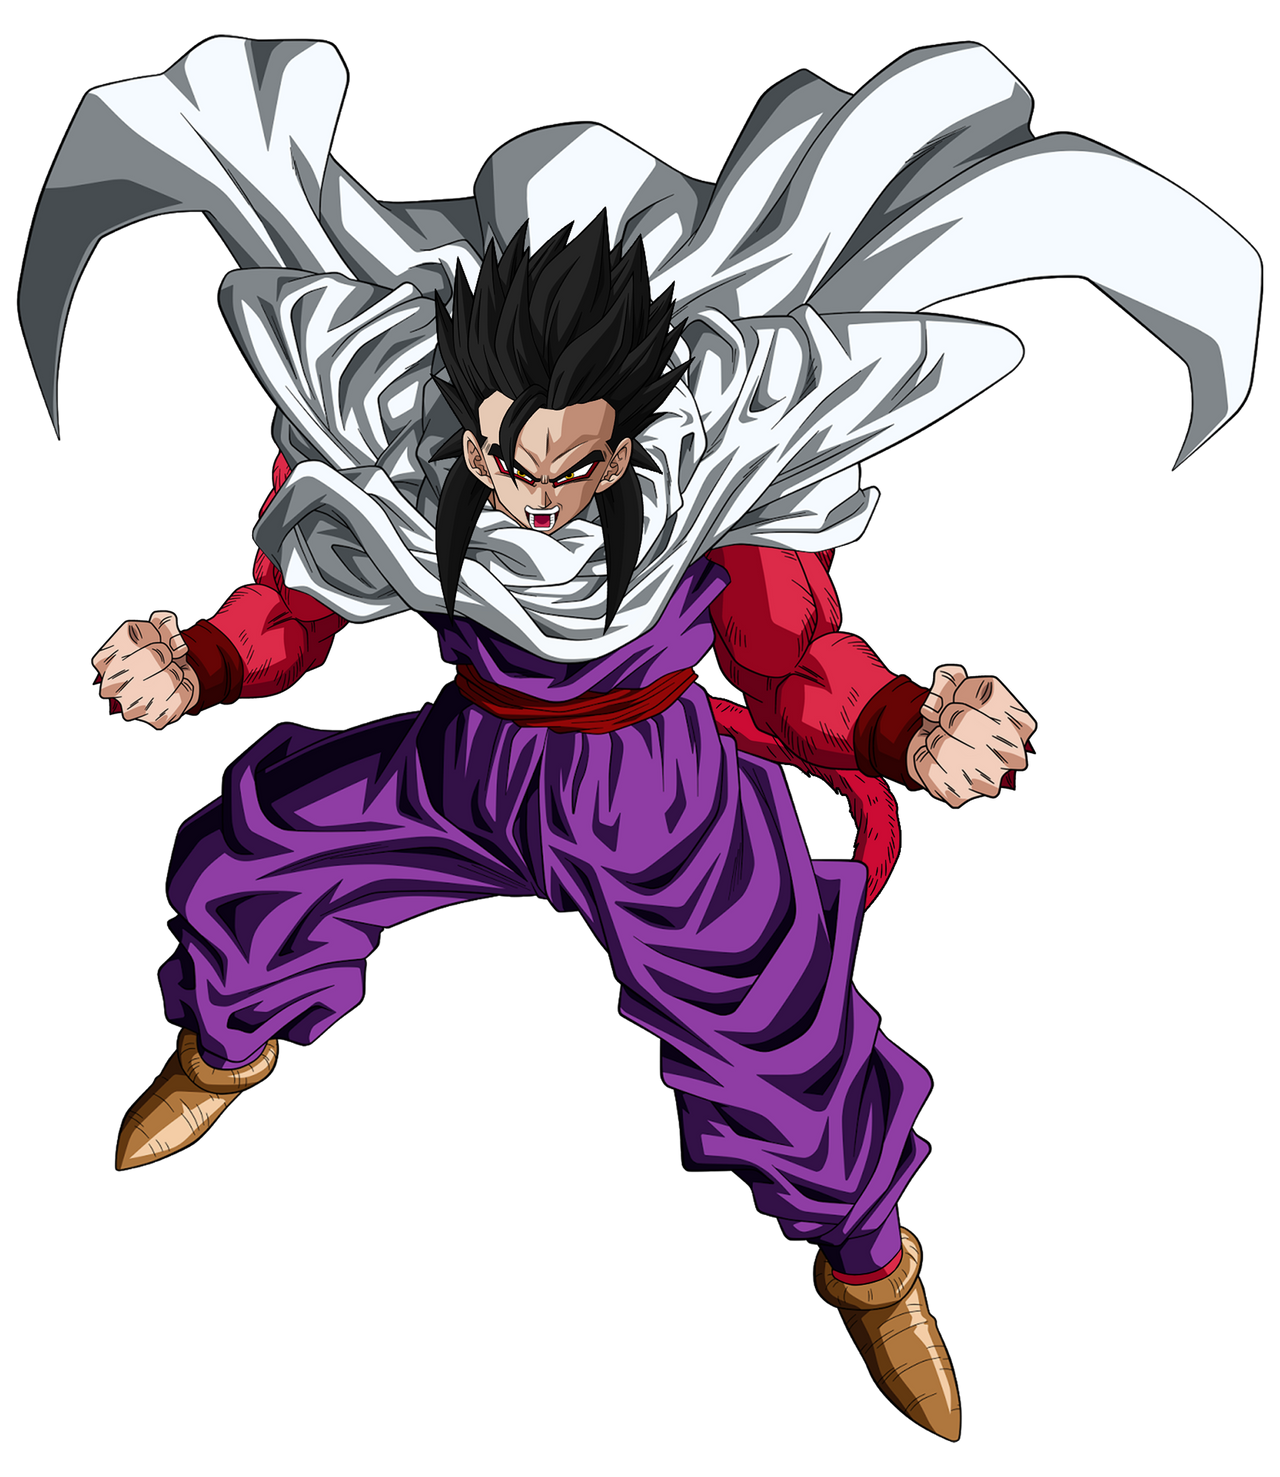 Goku AF - Super Saiyajin 5 Dios Dragon by SebaToledo on DeviantArt